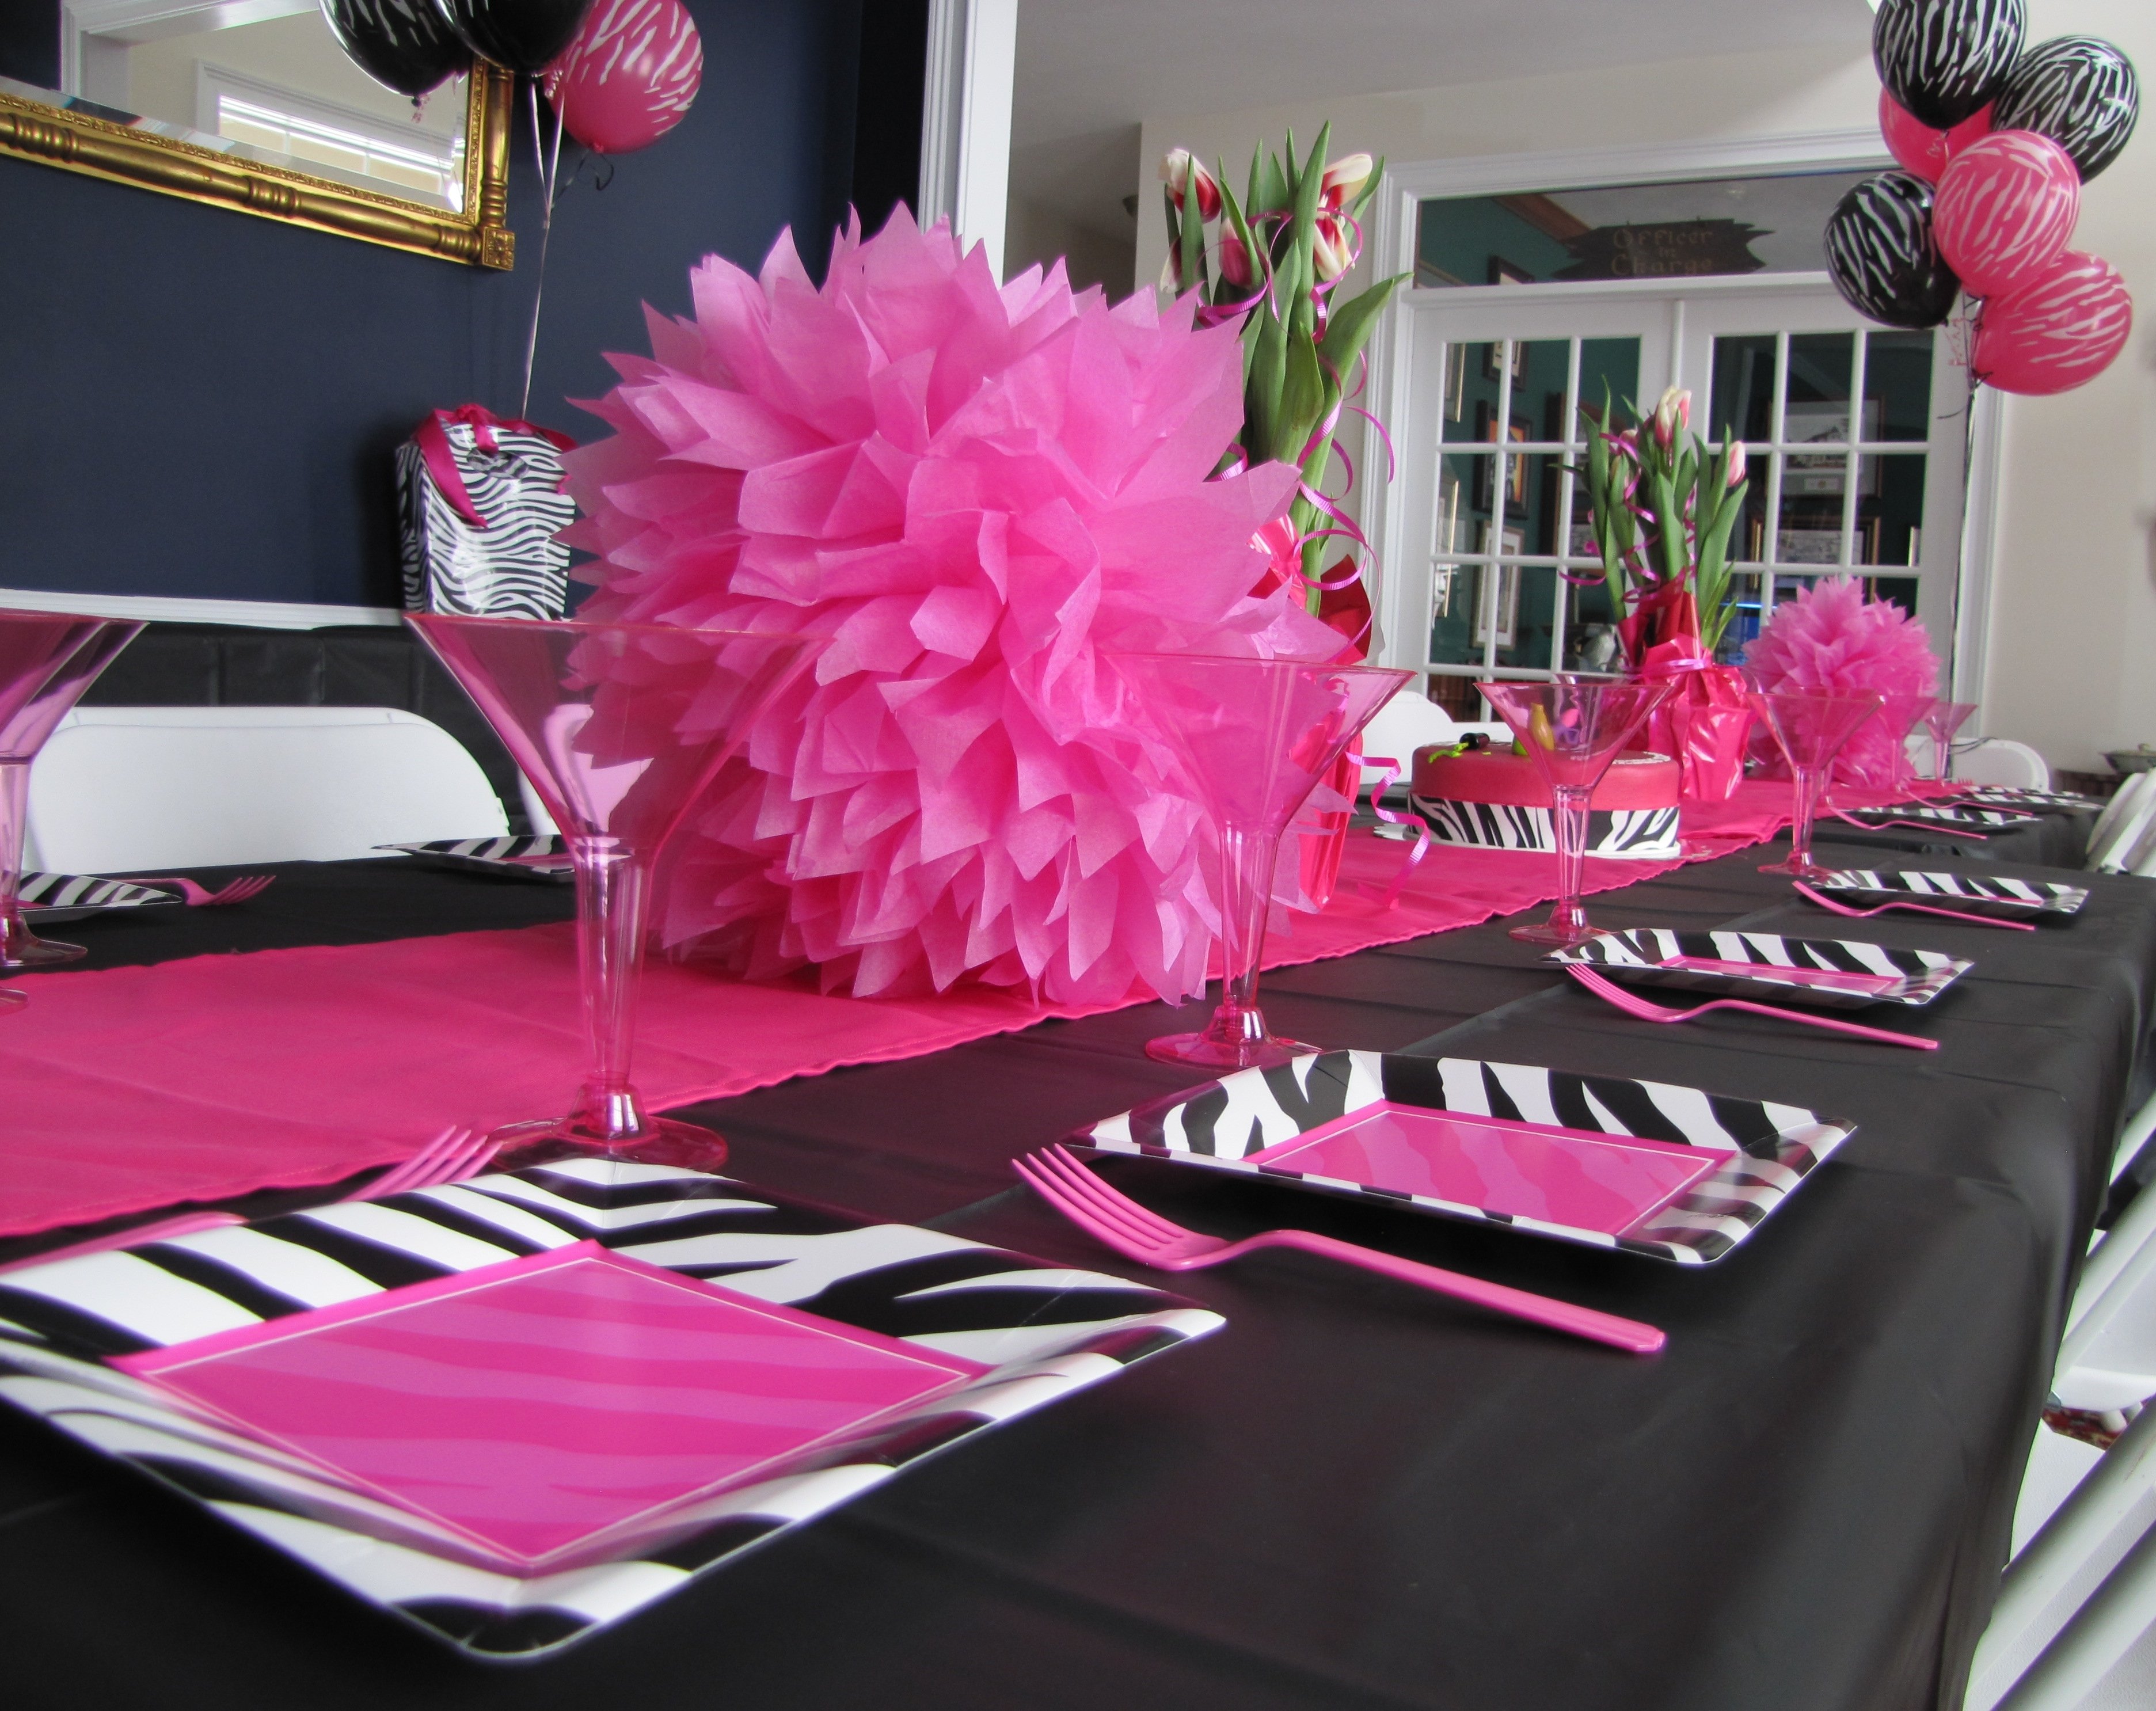 10 Ideal Pink And Zebra Party Ideas zebra print party supplies and decorations zebra print party 2 2022